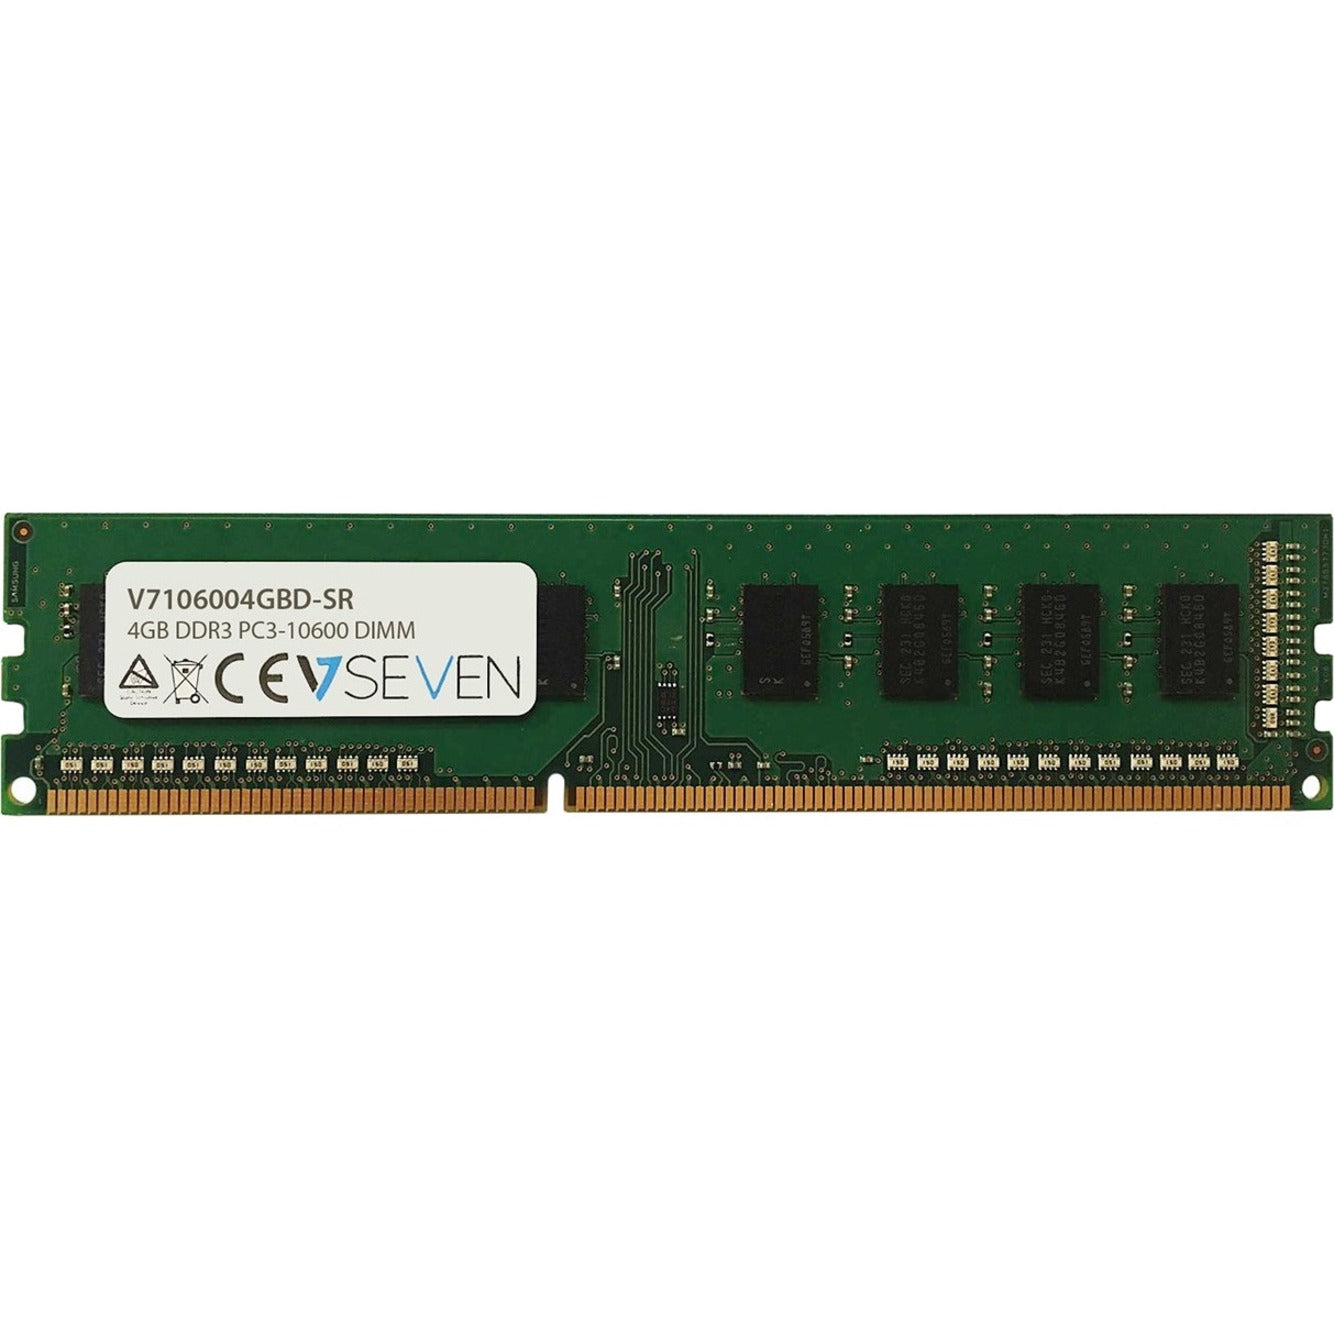 V7 V7106004GBD-SR 4GB DDR3 SDRAM Memory Module, 1333 MHz, CL9, Unbuffered